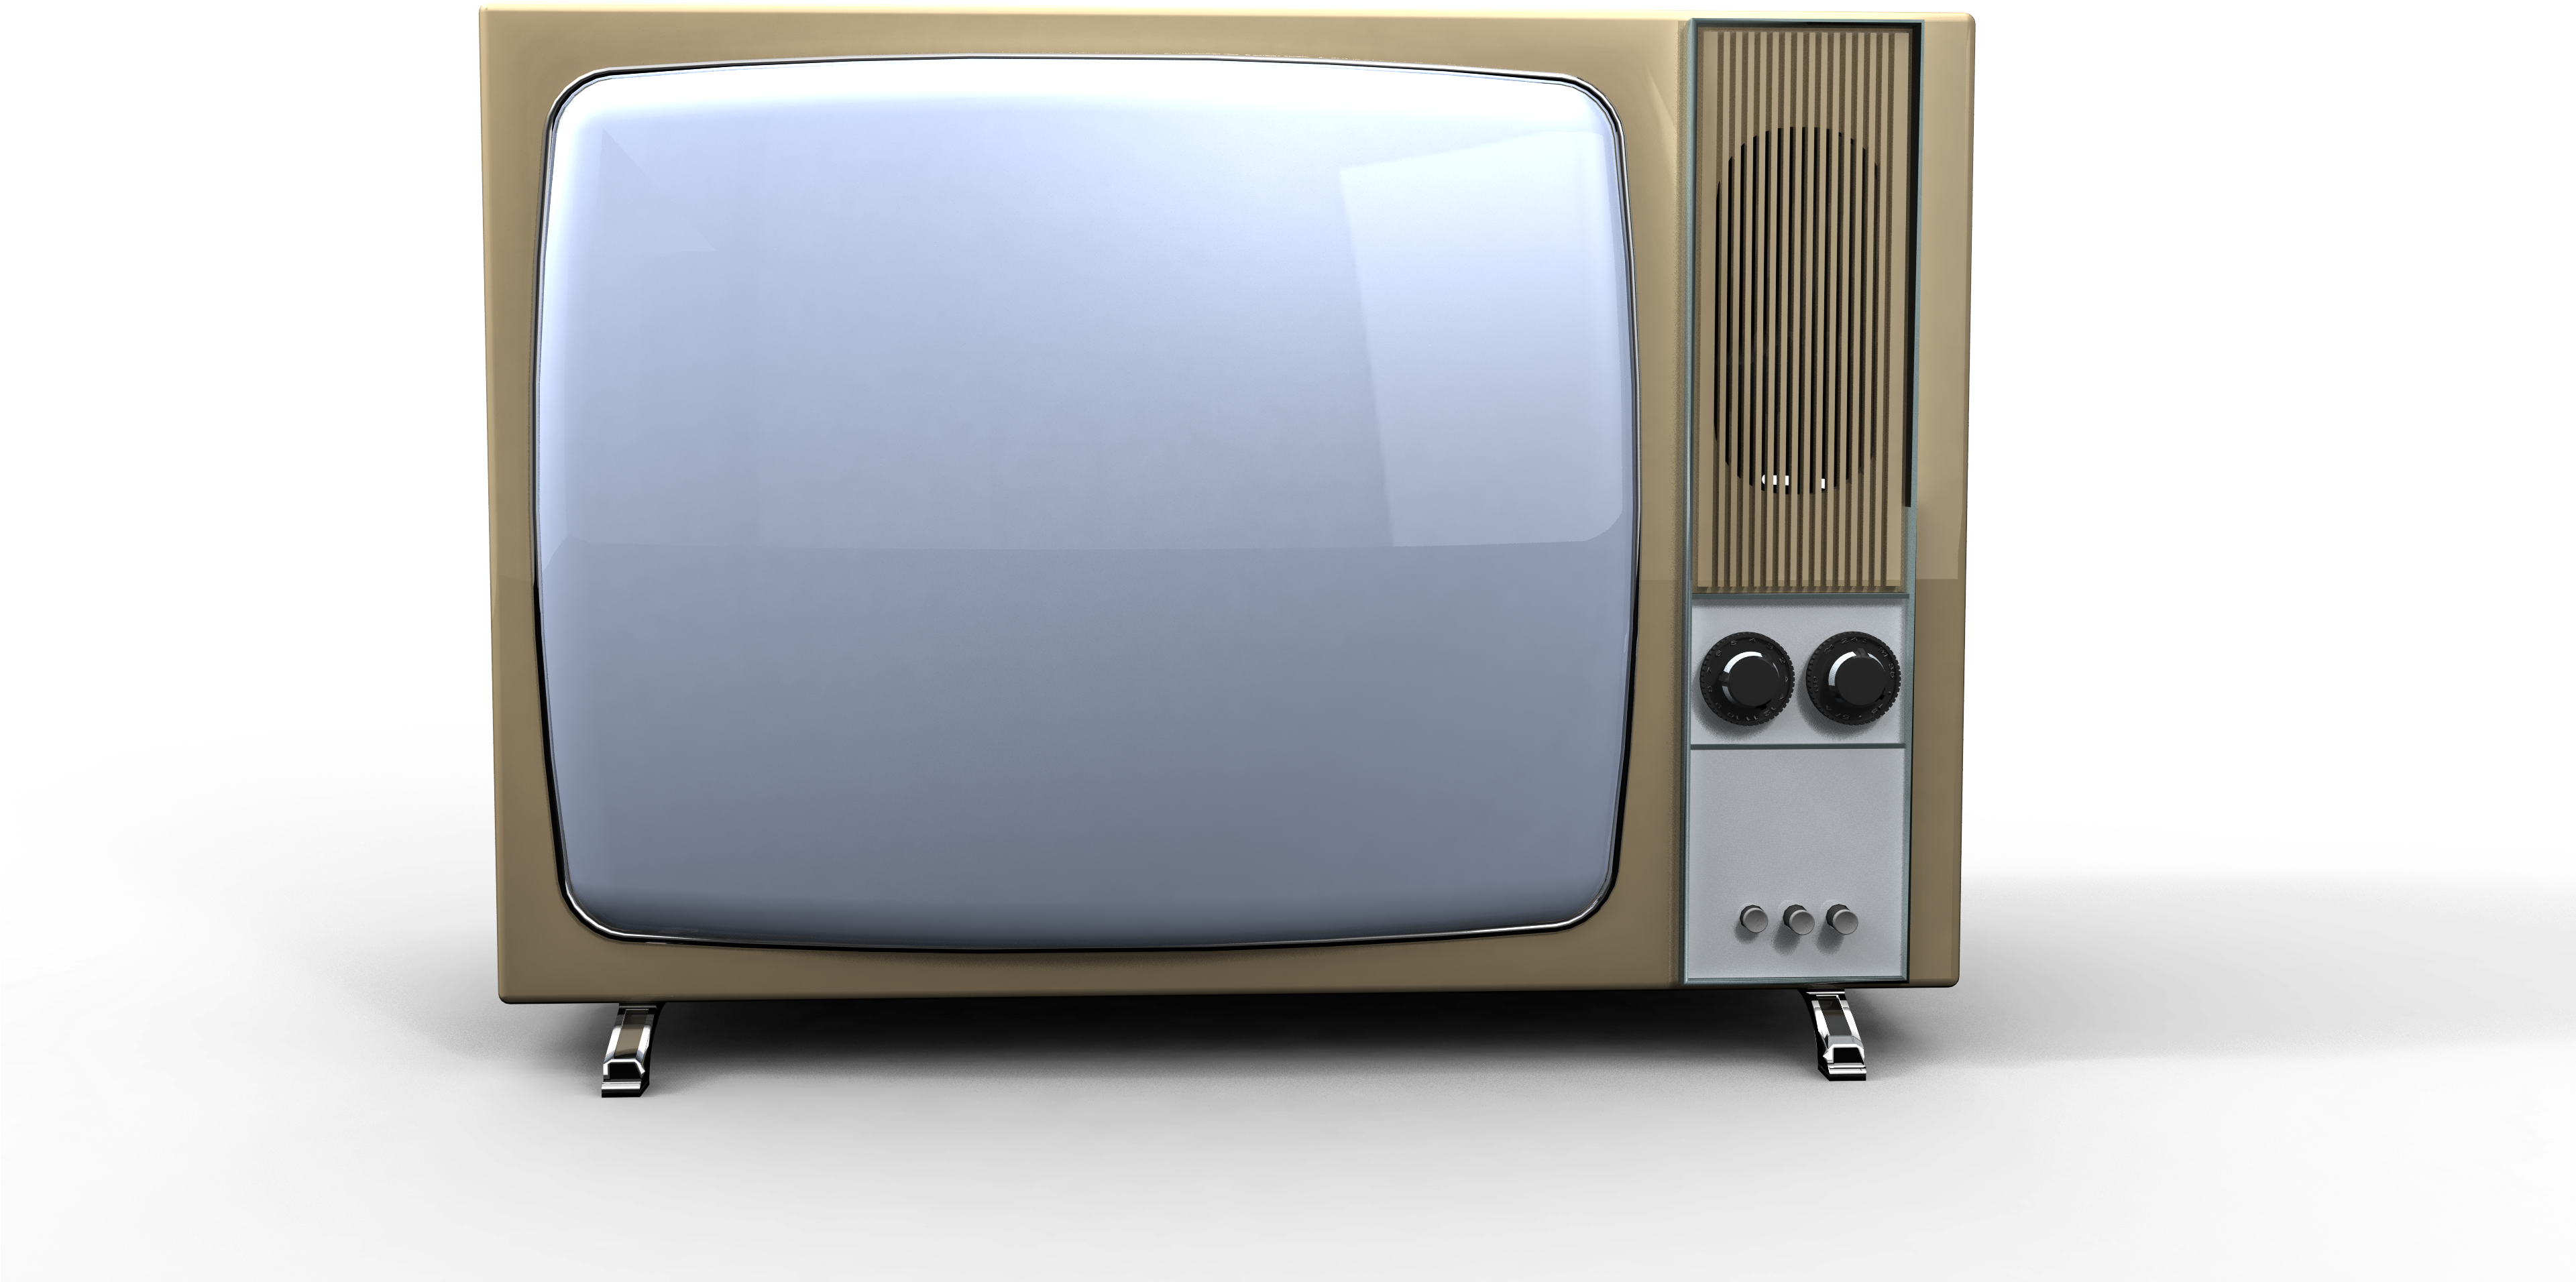 Старый телевизор. Старинный телевизор. Ретро телевизор сбоку. Старый телевизор на белом фоне. Tv old 2